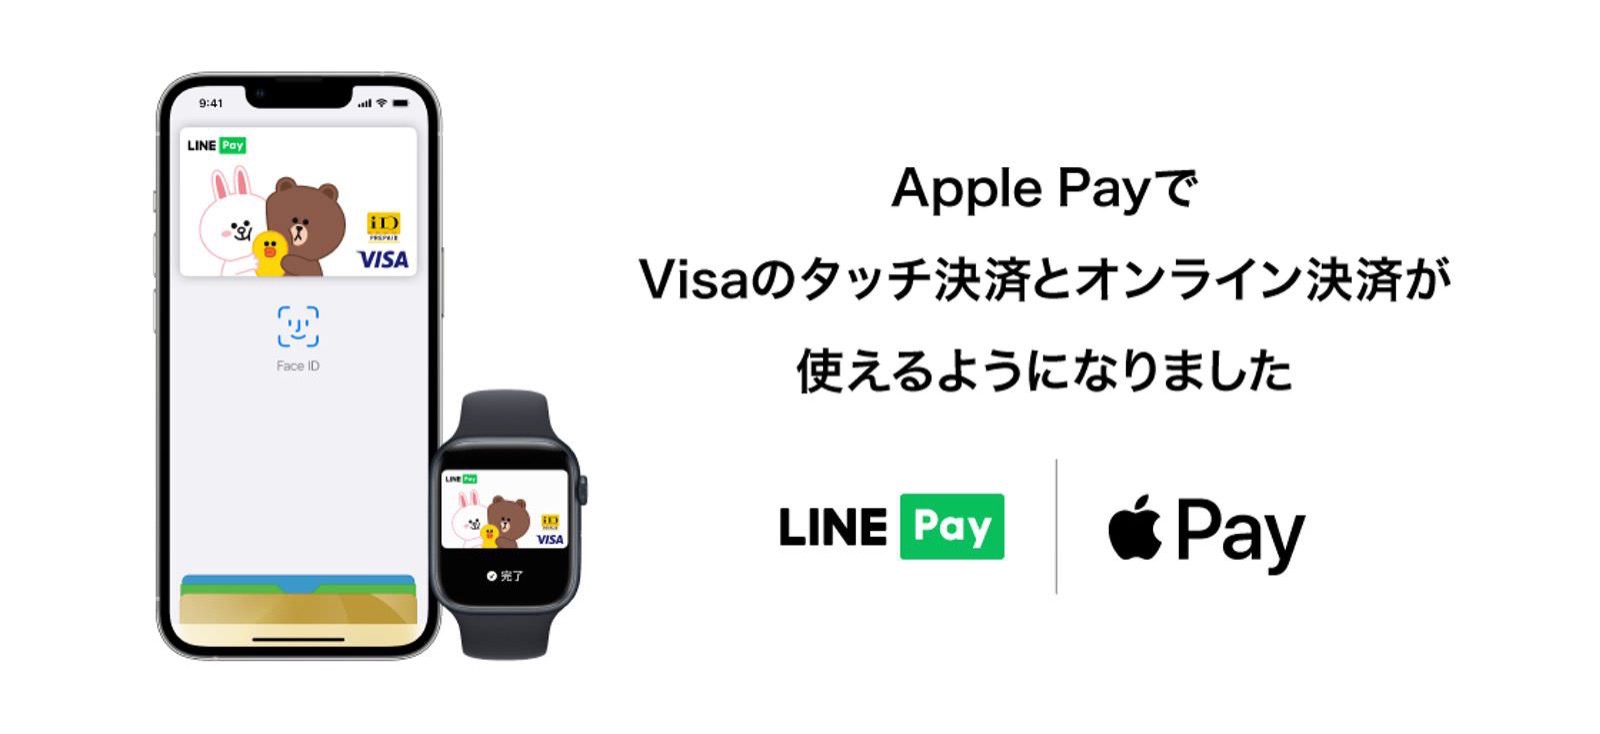 LINE Pay VISA ApplePay 0000